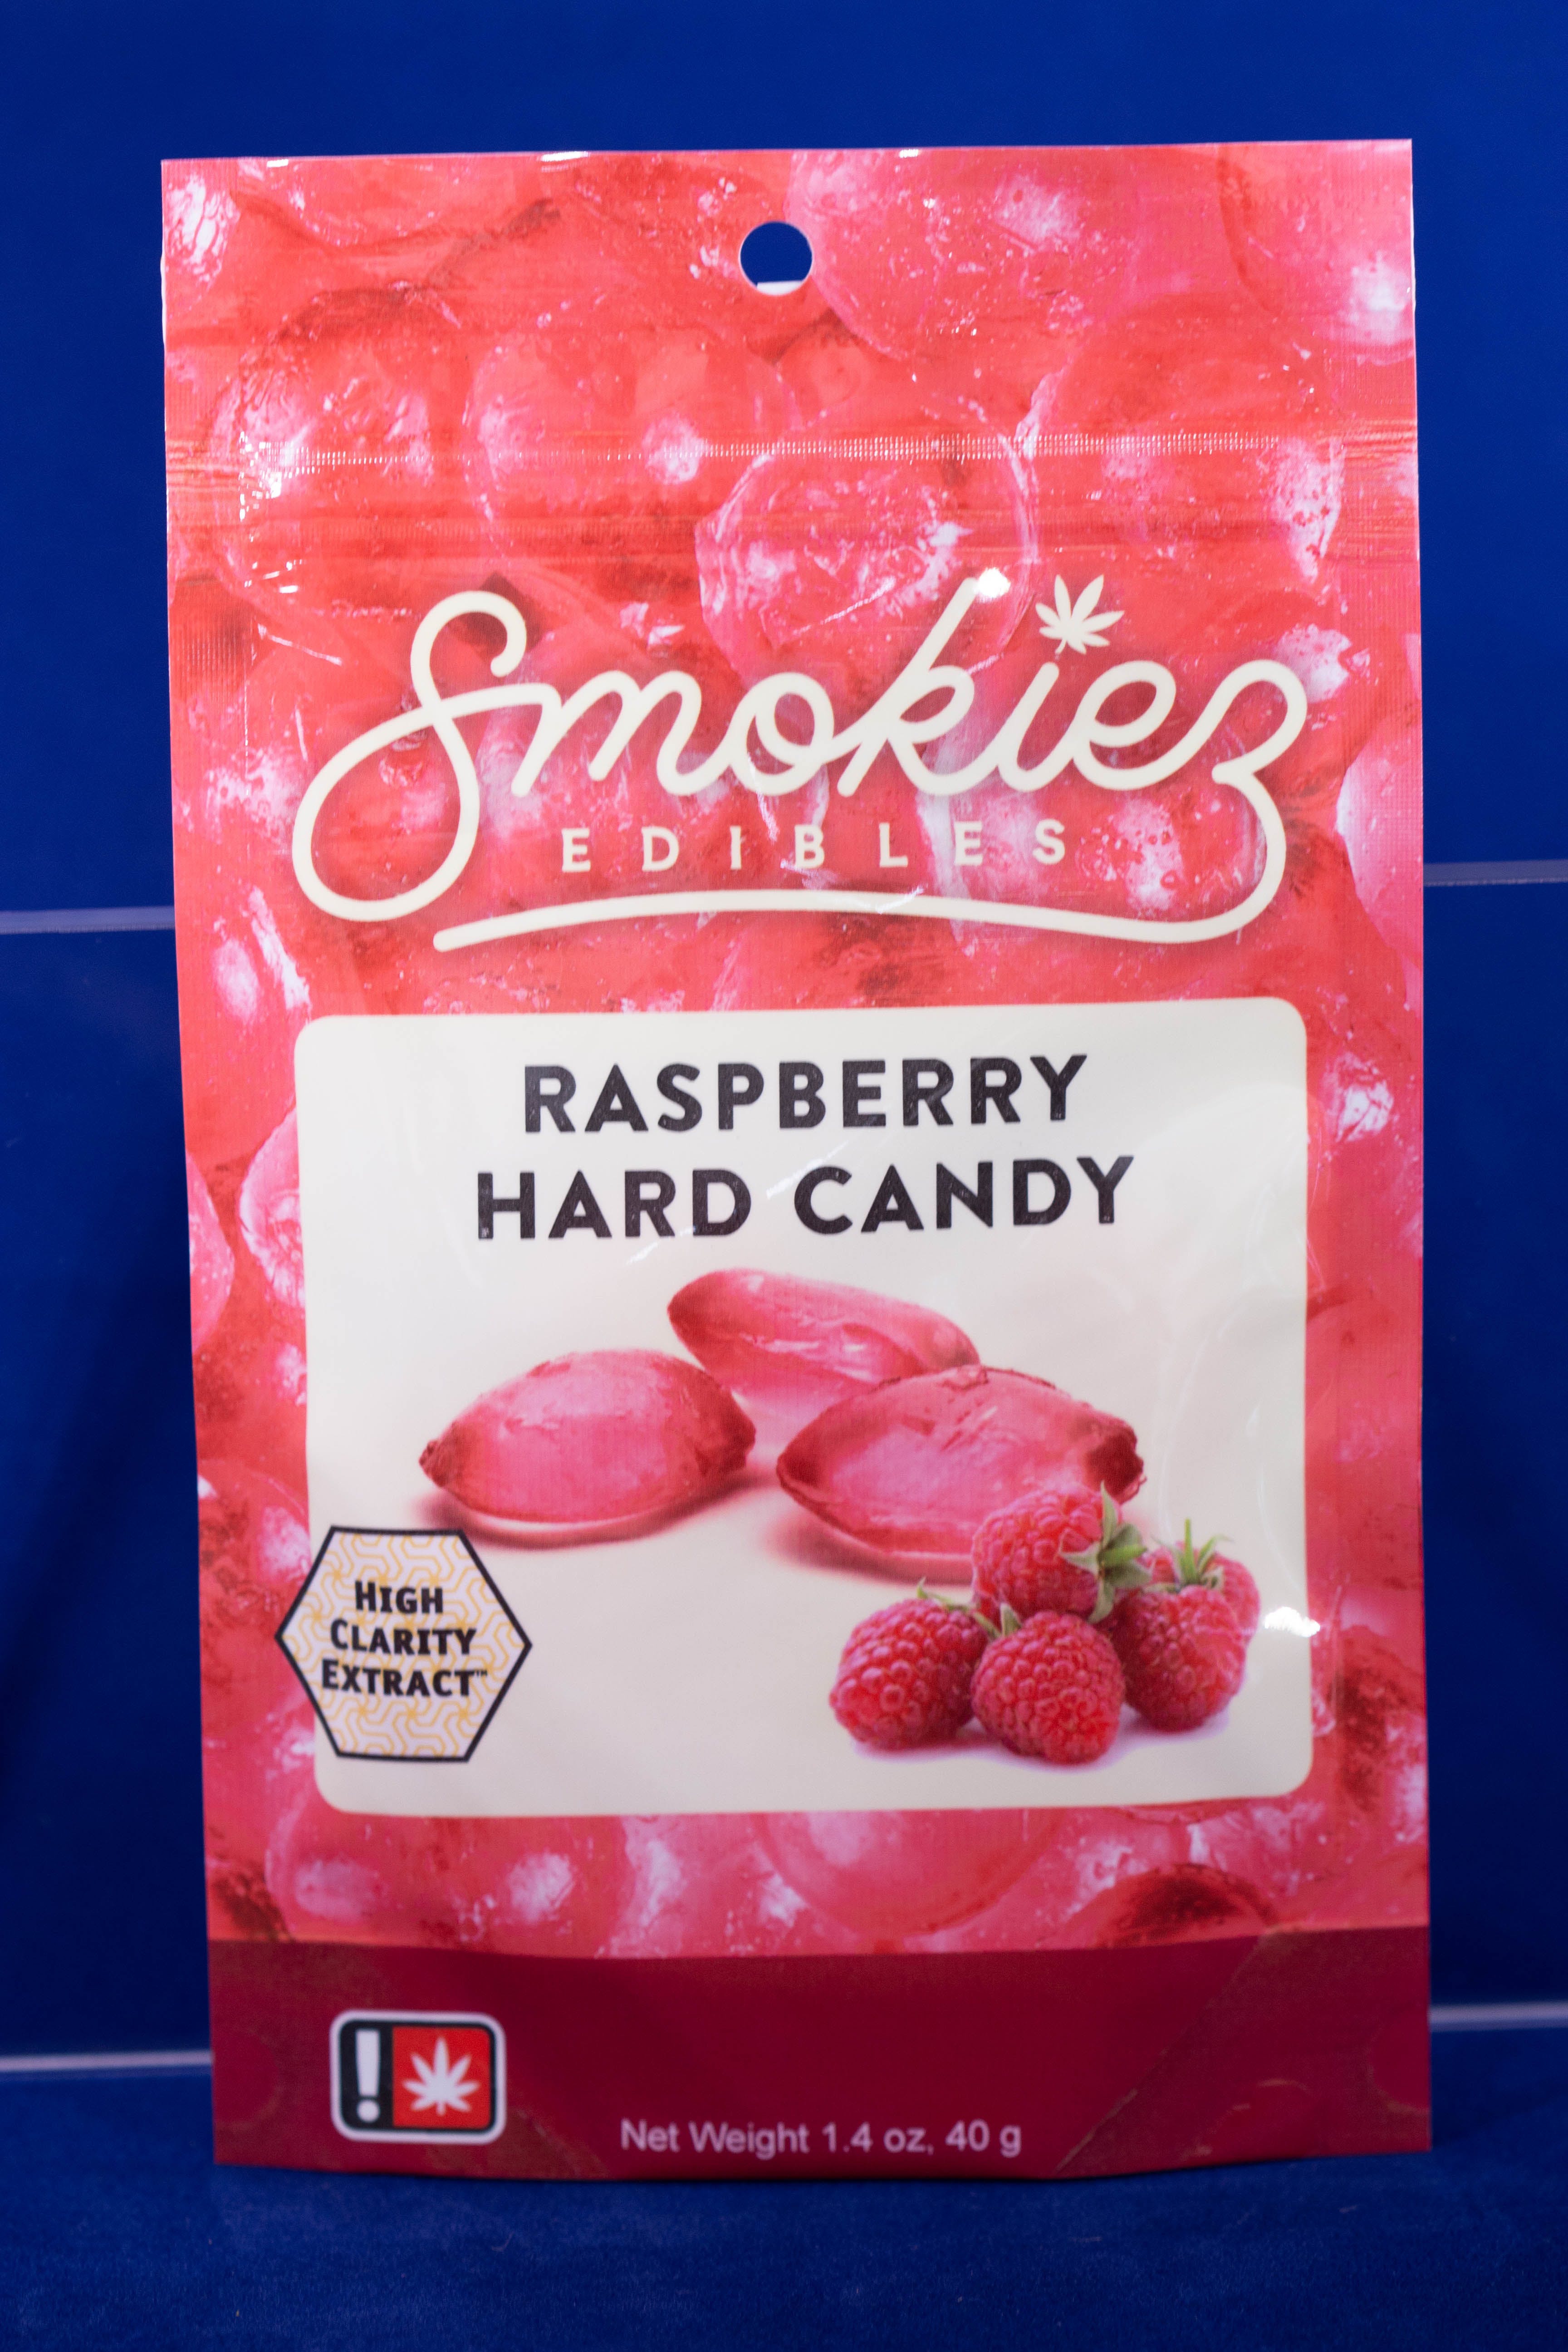 edible-raspberry-hard-candy-by-smokiez